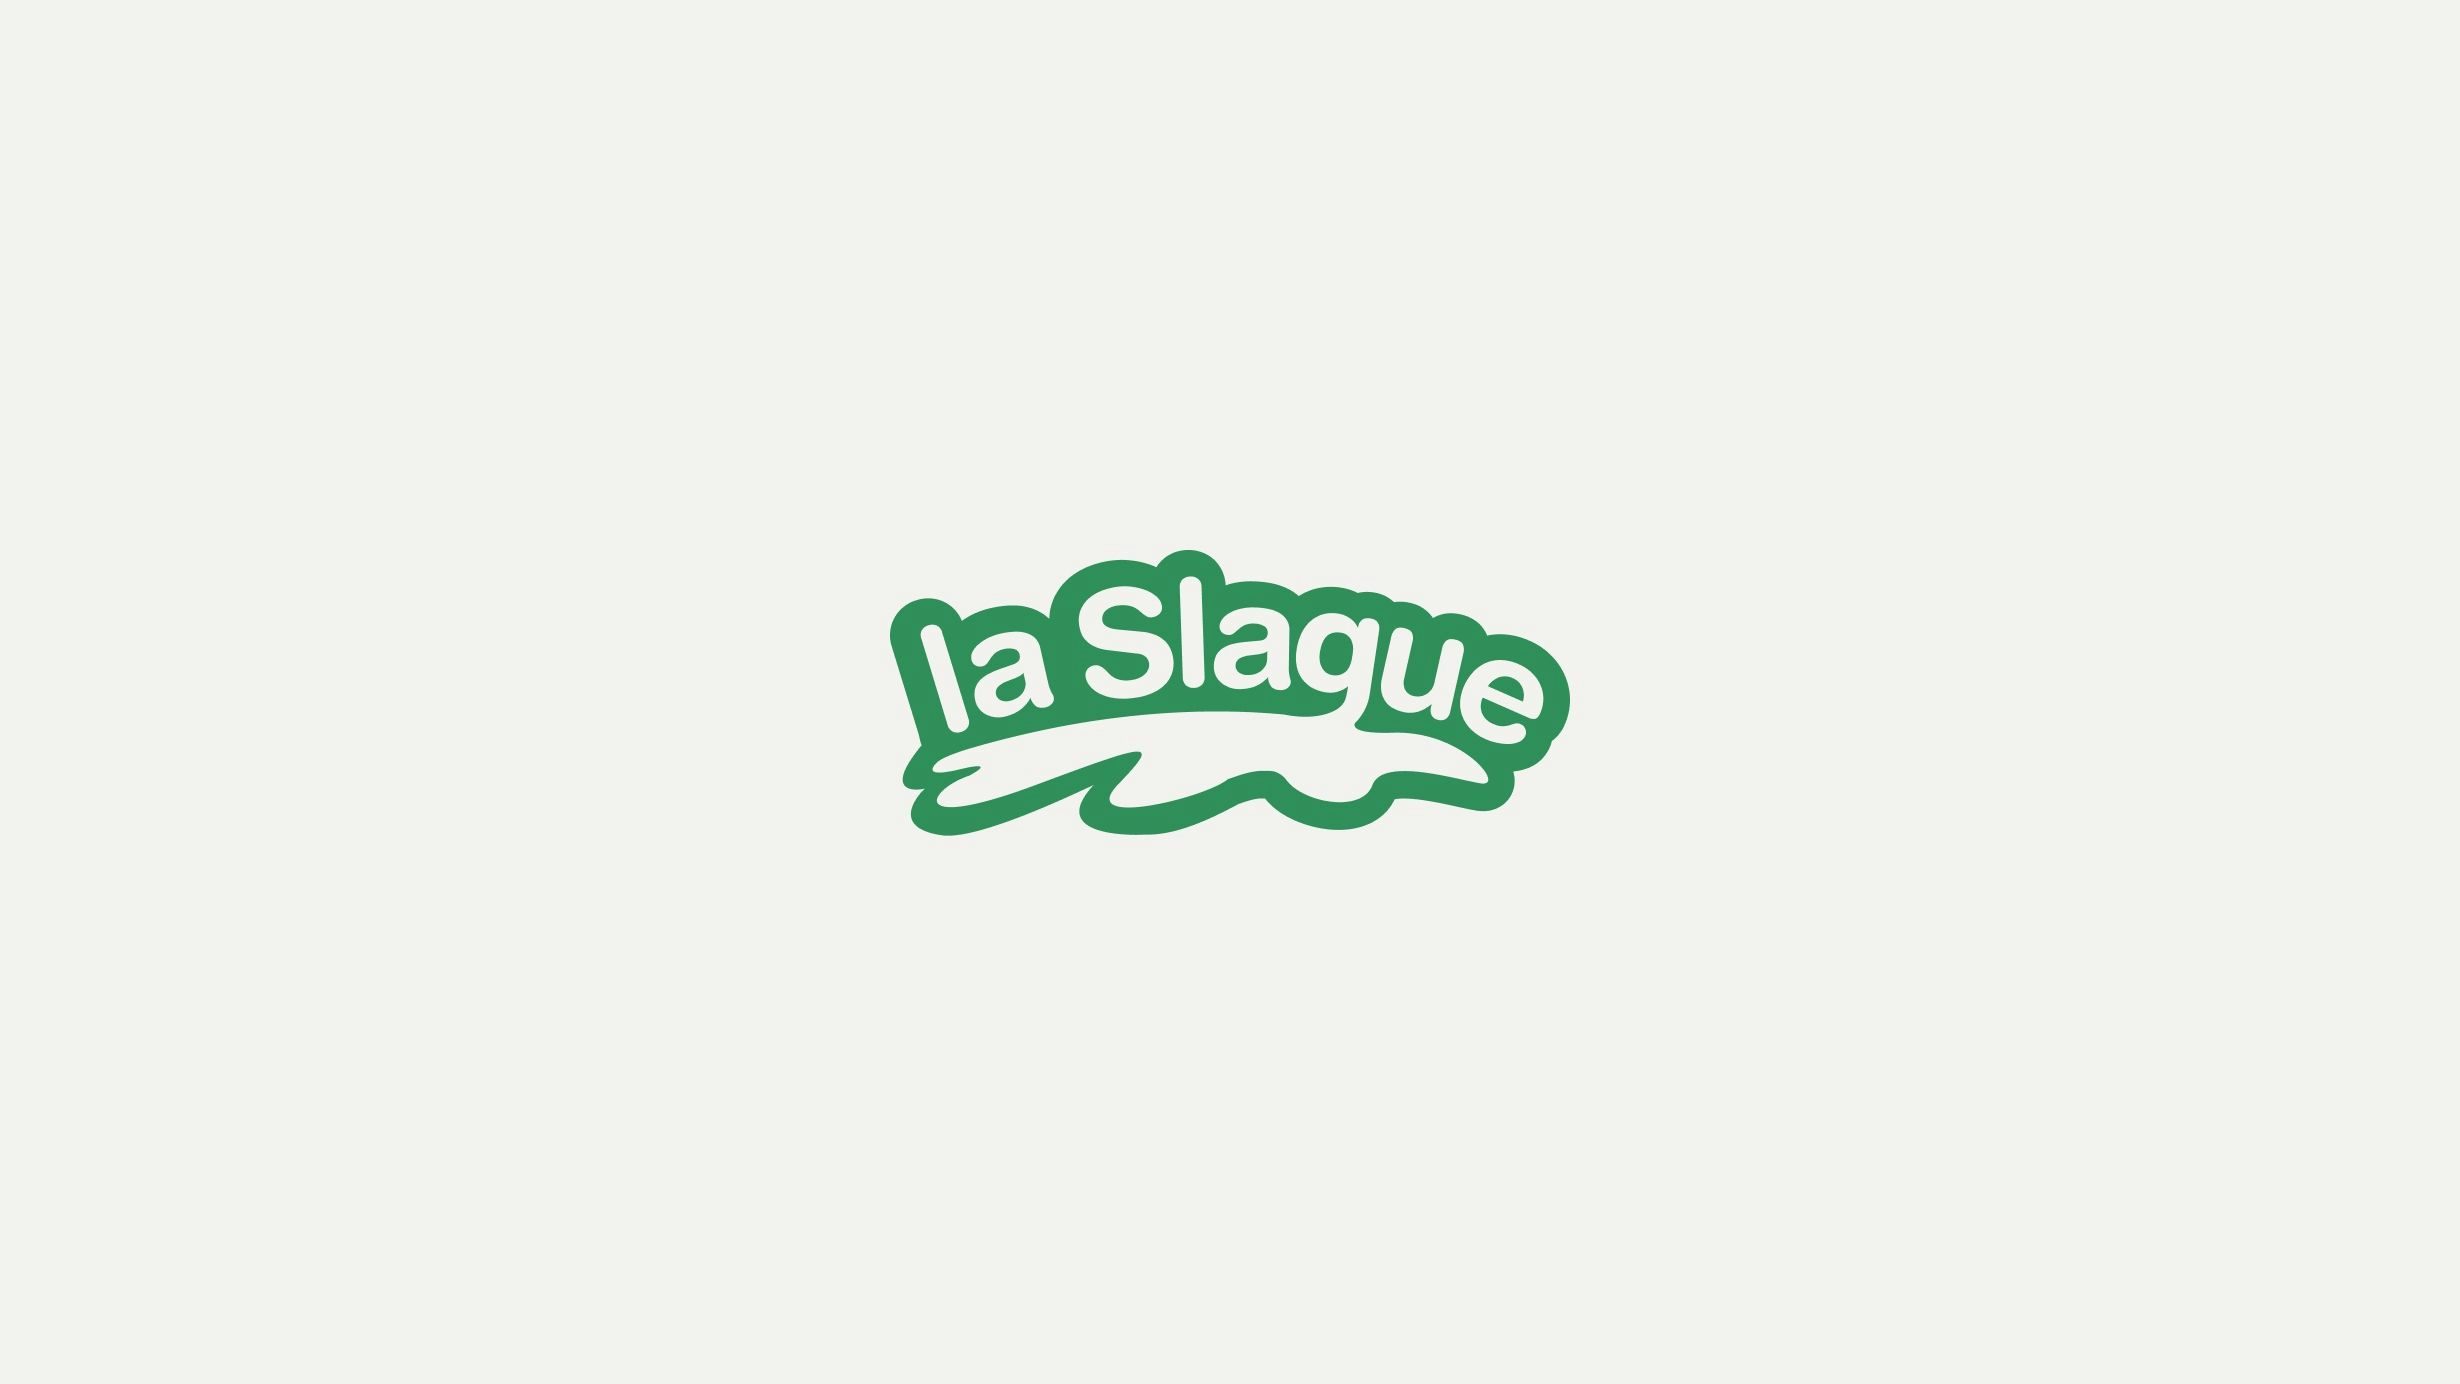 La Slague logo in green